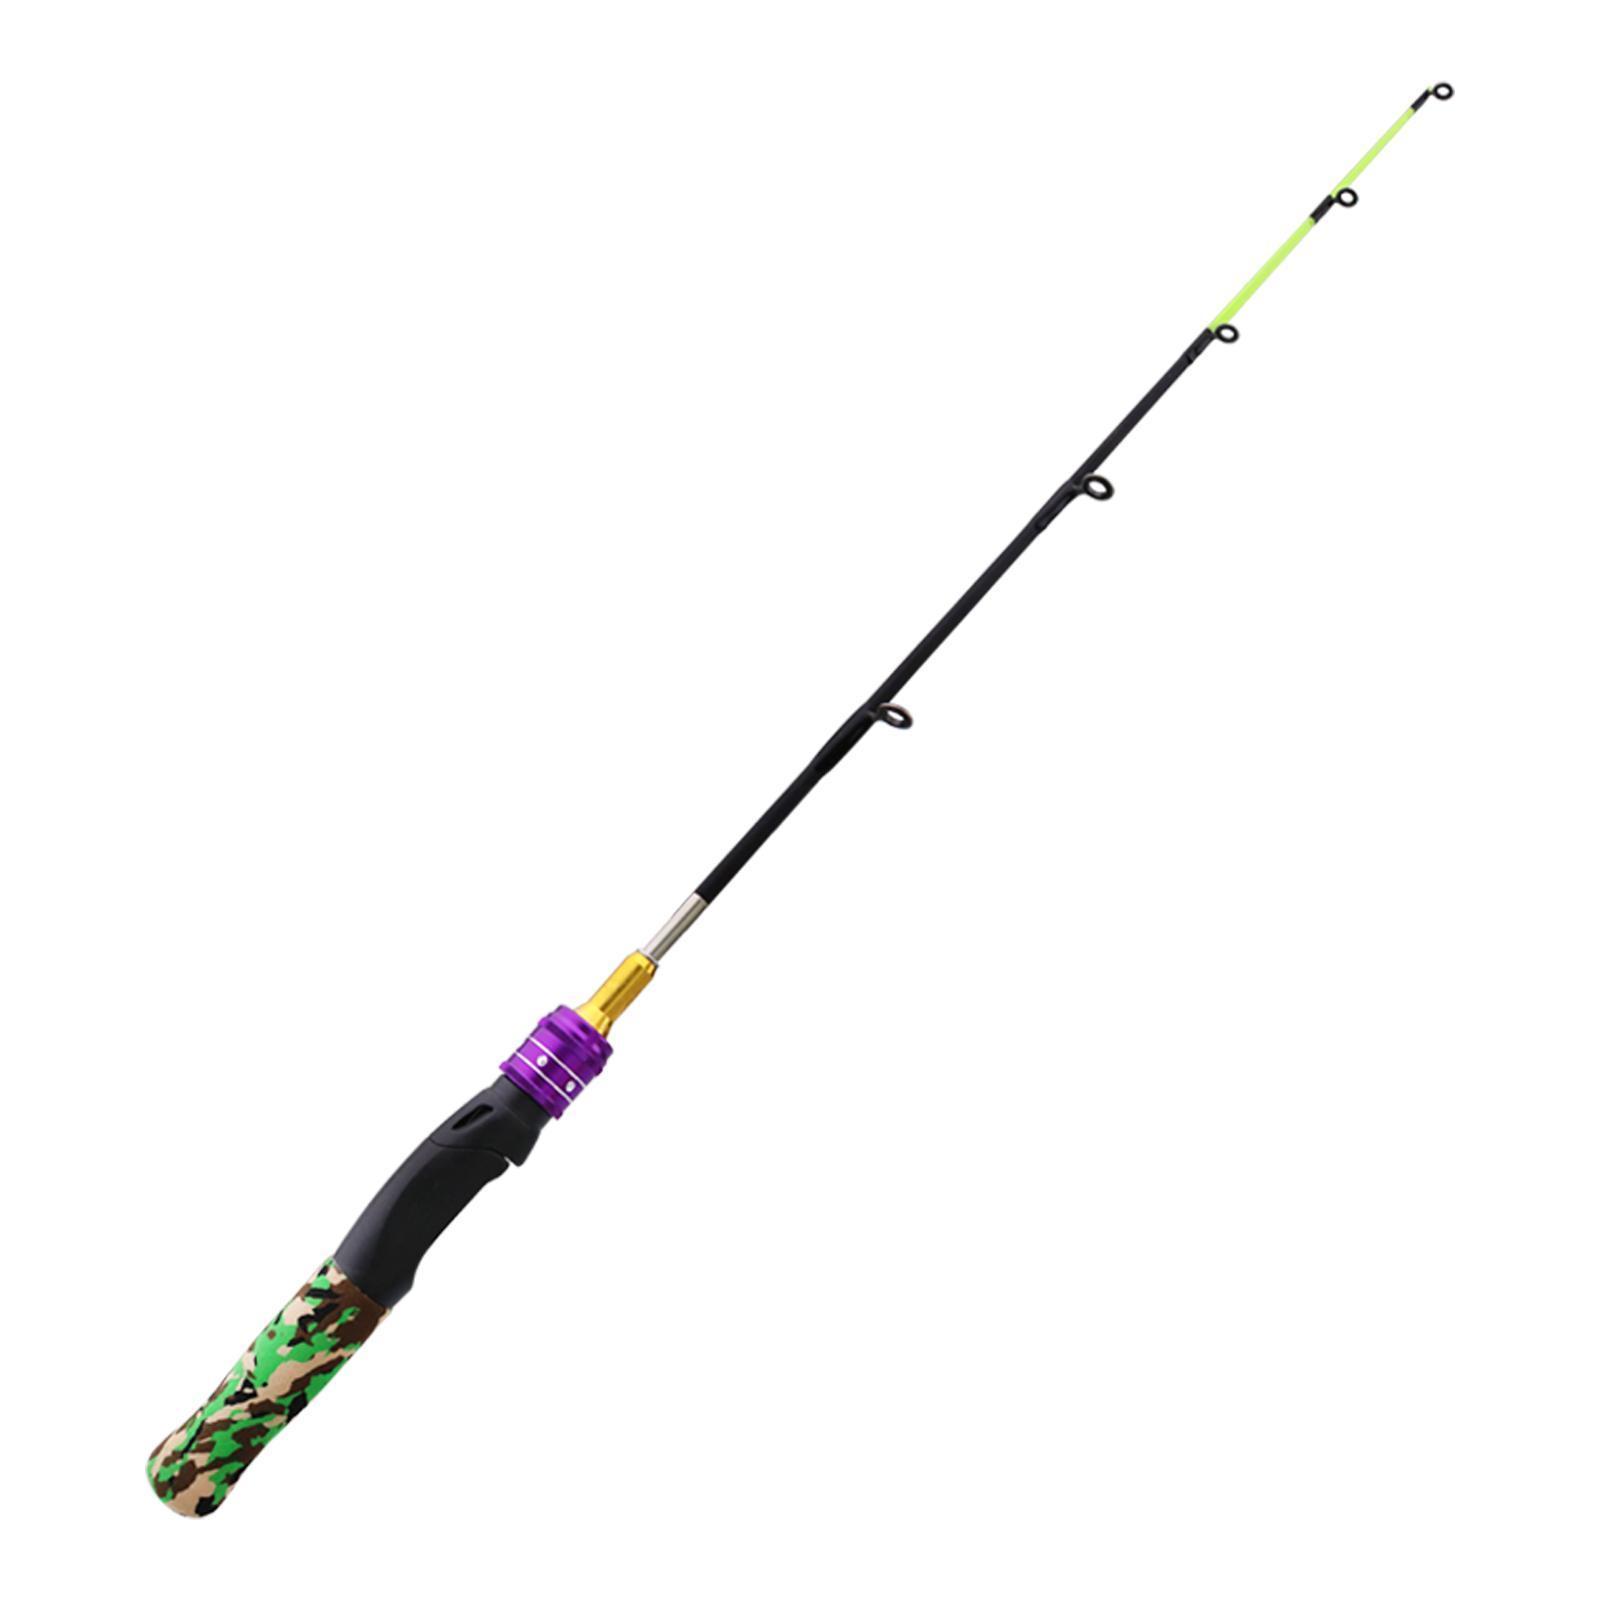 Lixada 61cm Ice Fishing Rod Portable Lightweight Winter Ice Fishing Rod Spinning Ice Fishing Pole Tackle Promo